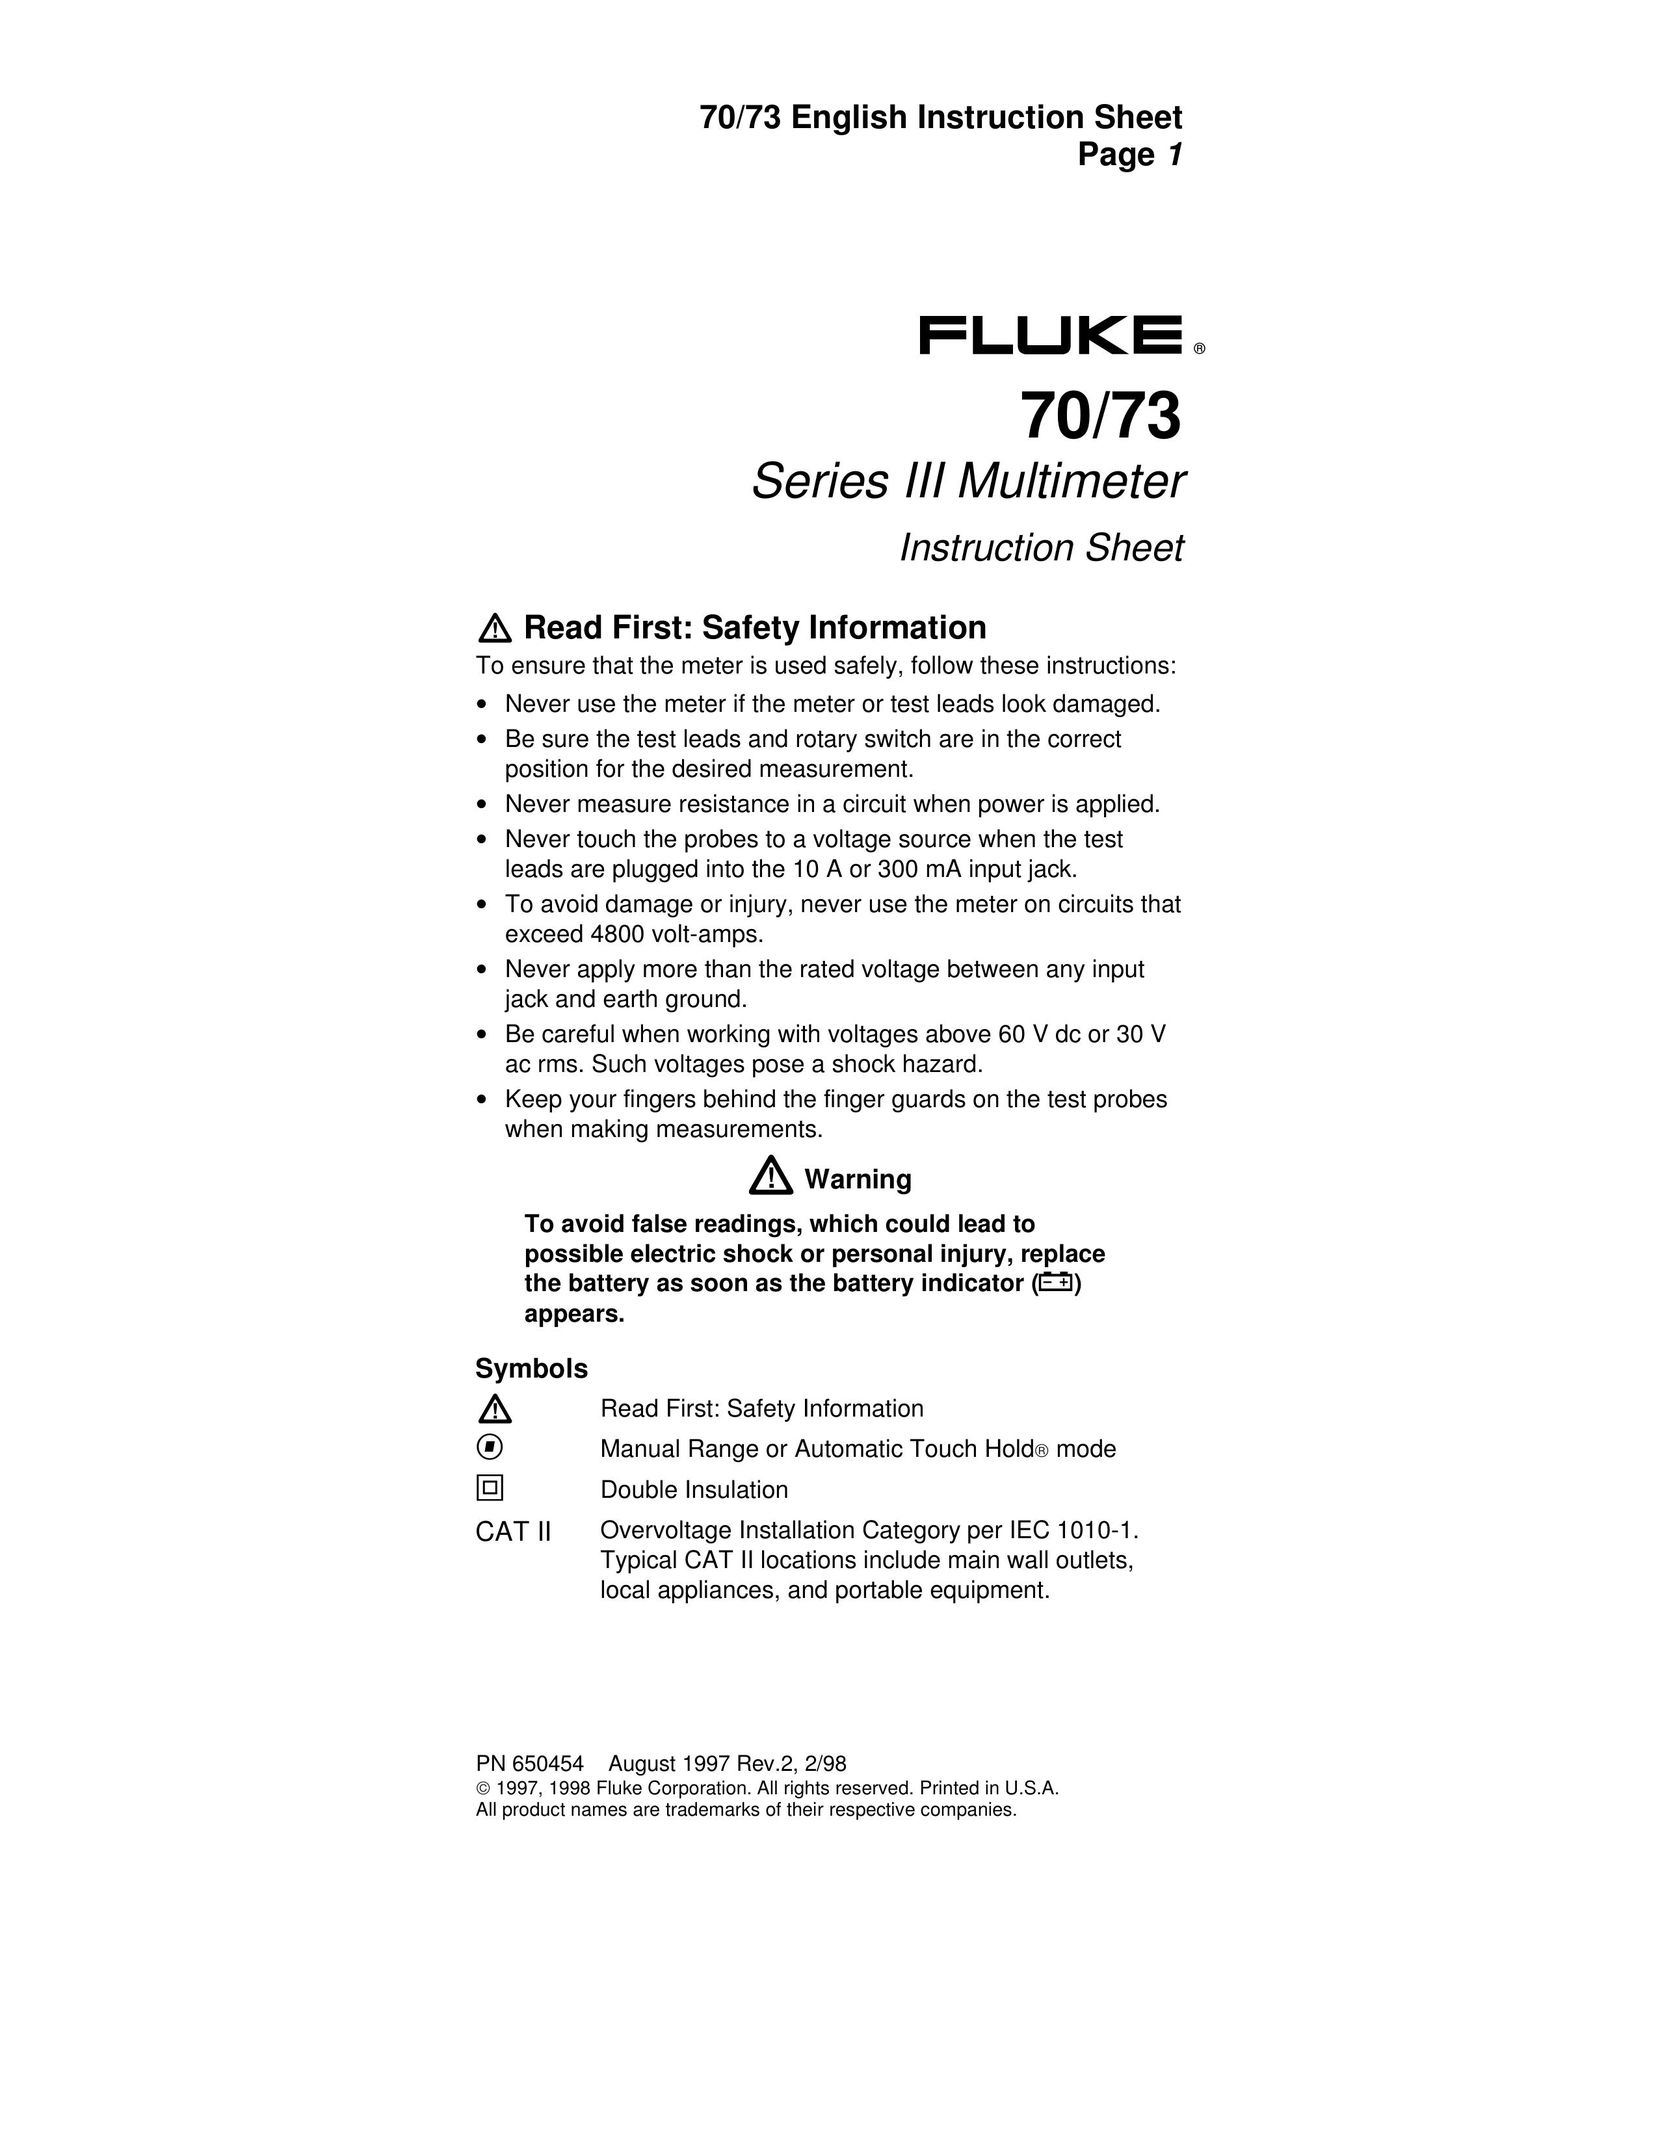 Fluke PN 650454 Impact Driver User Manual